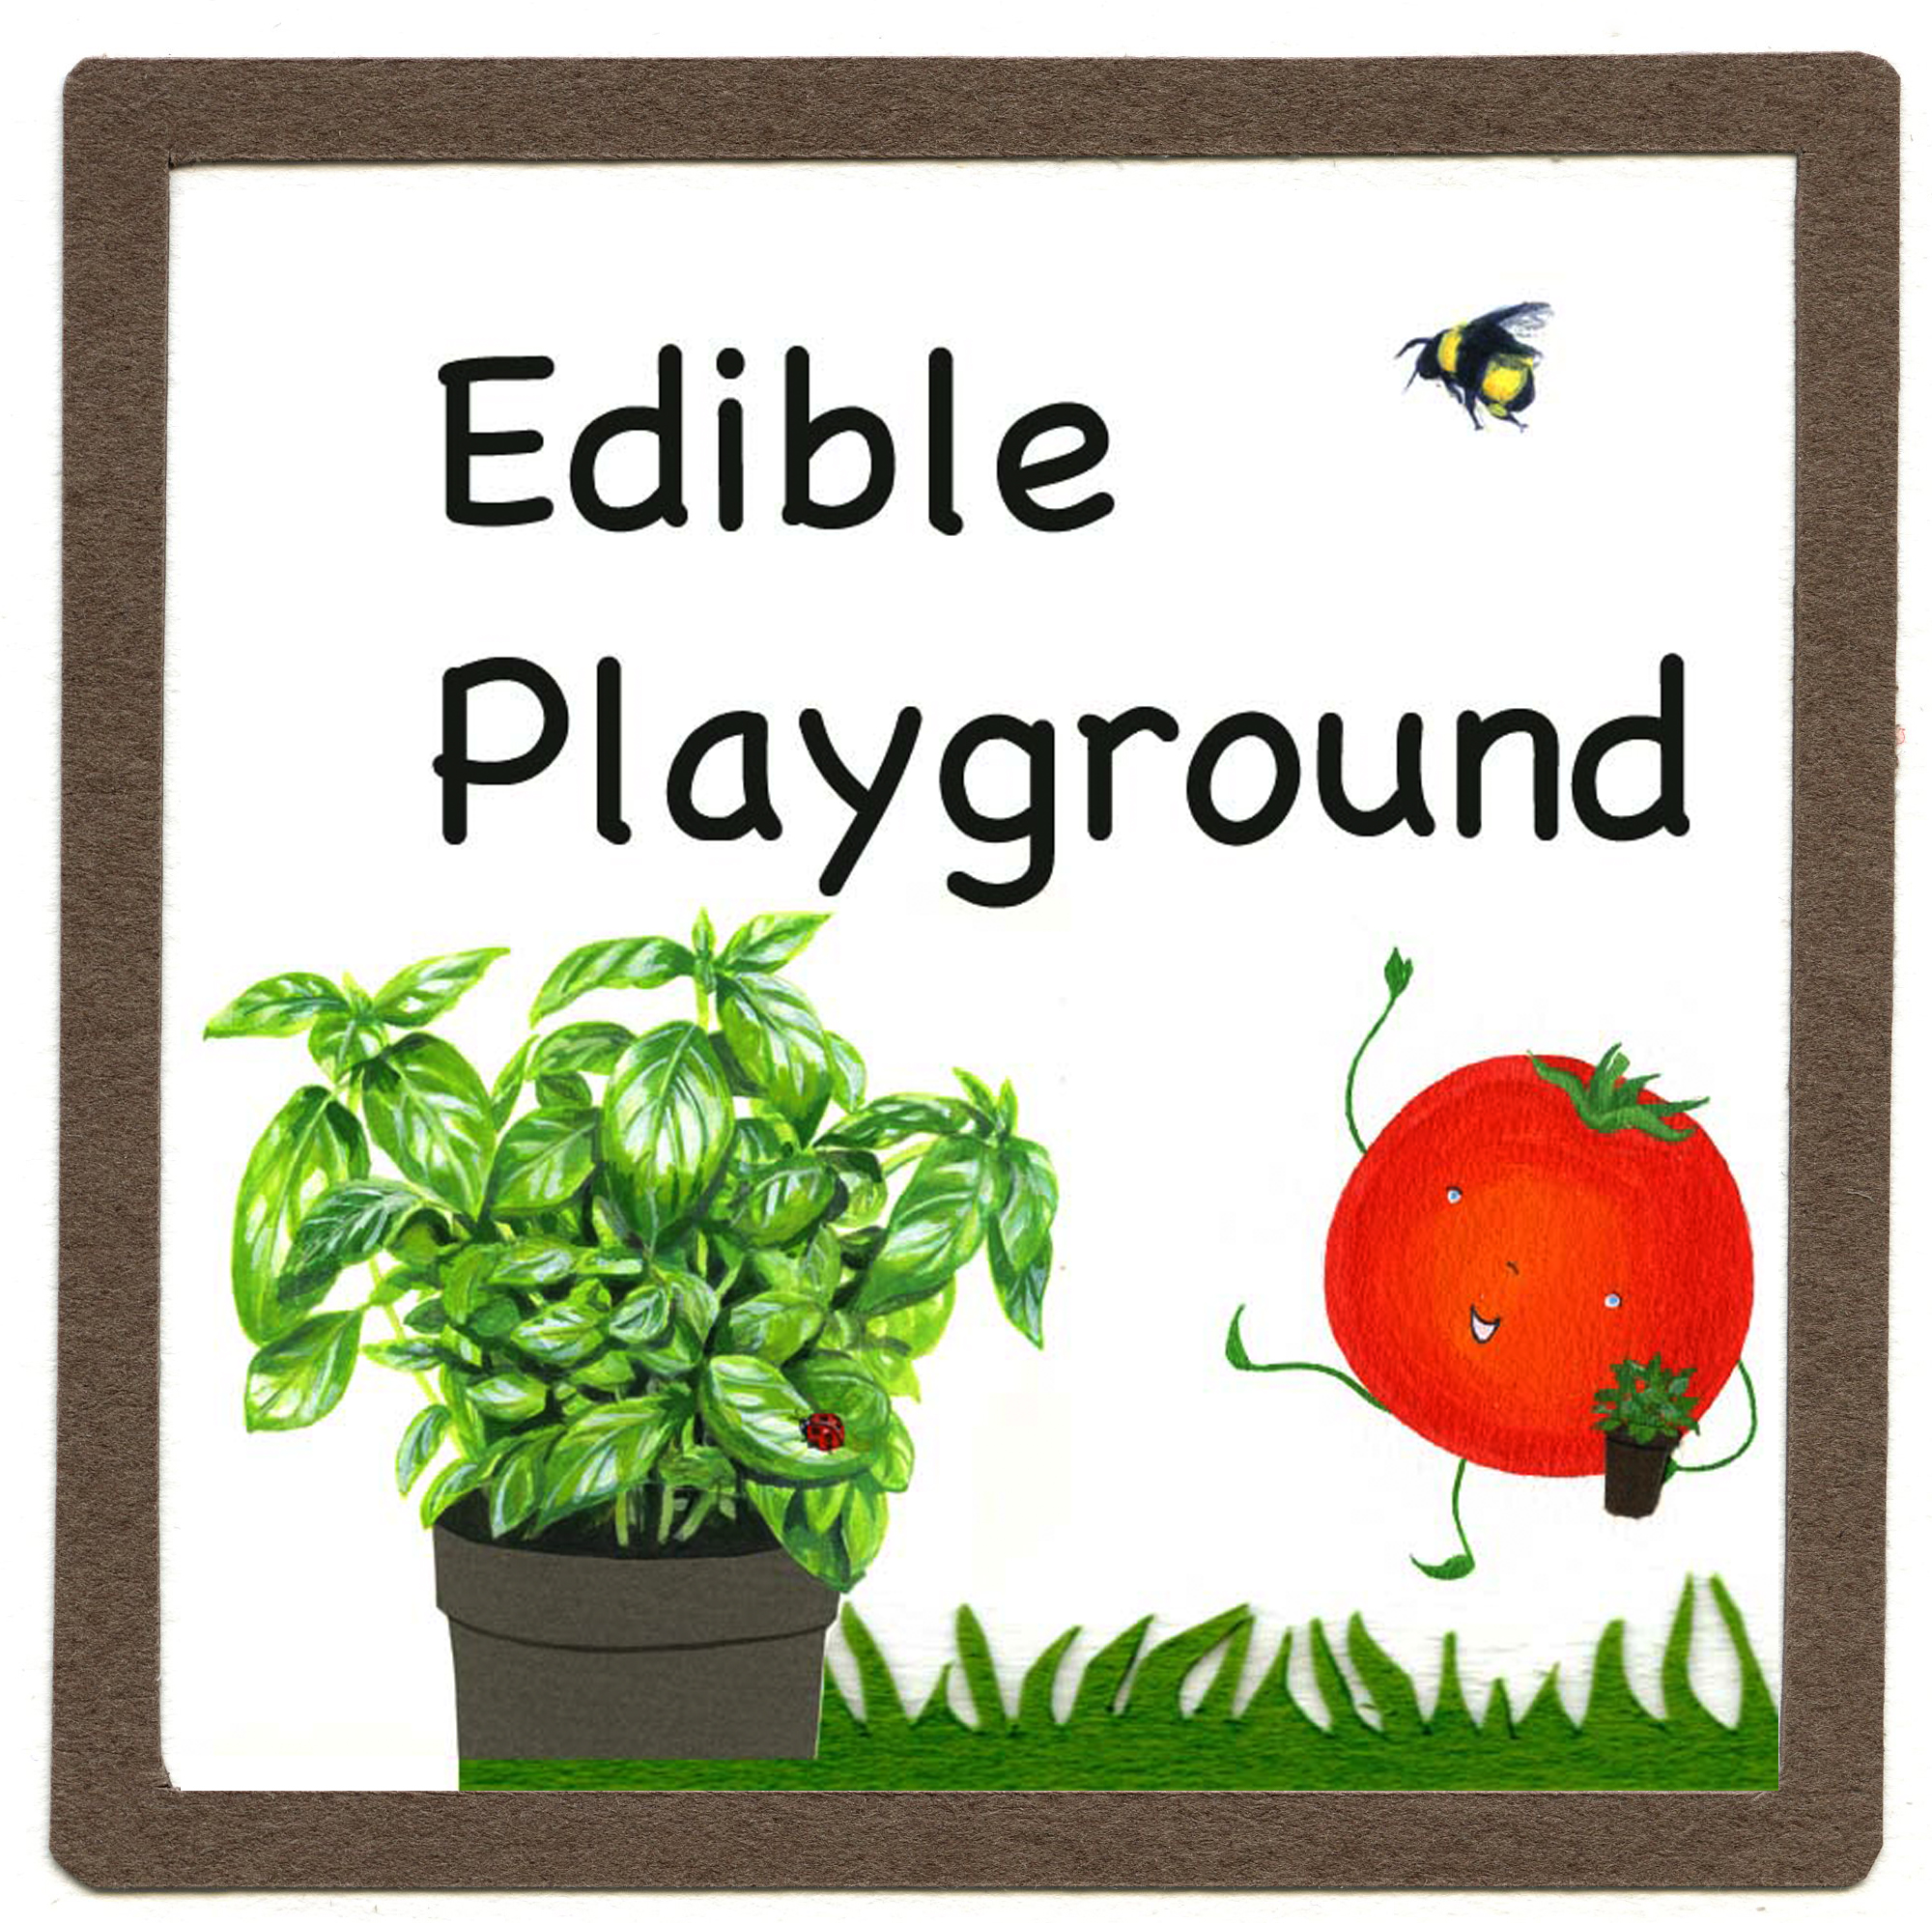 Edible Playground